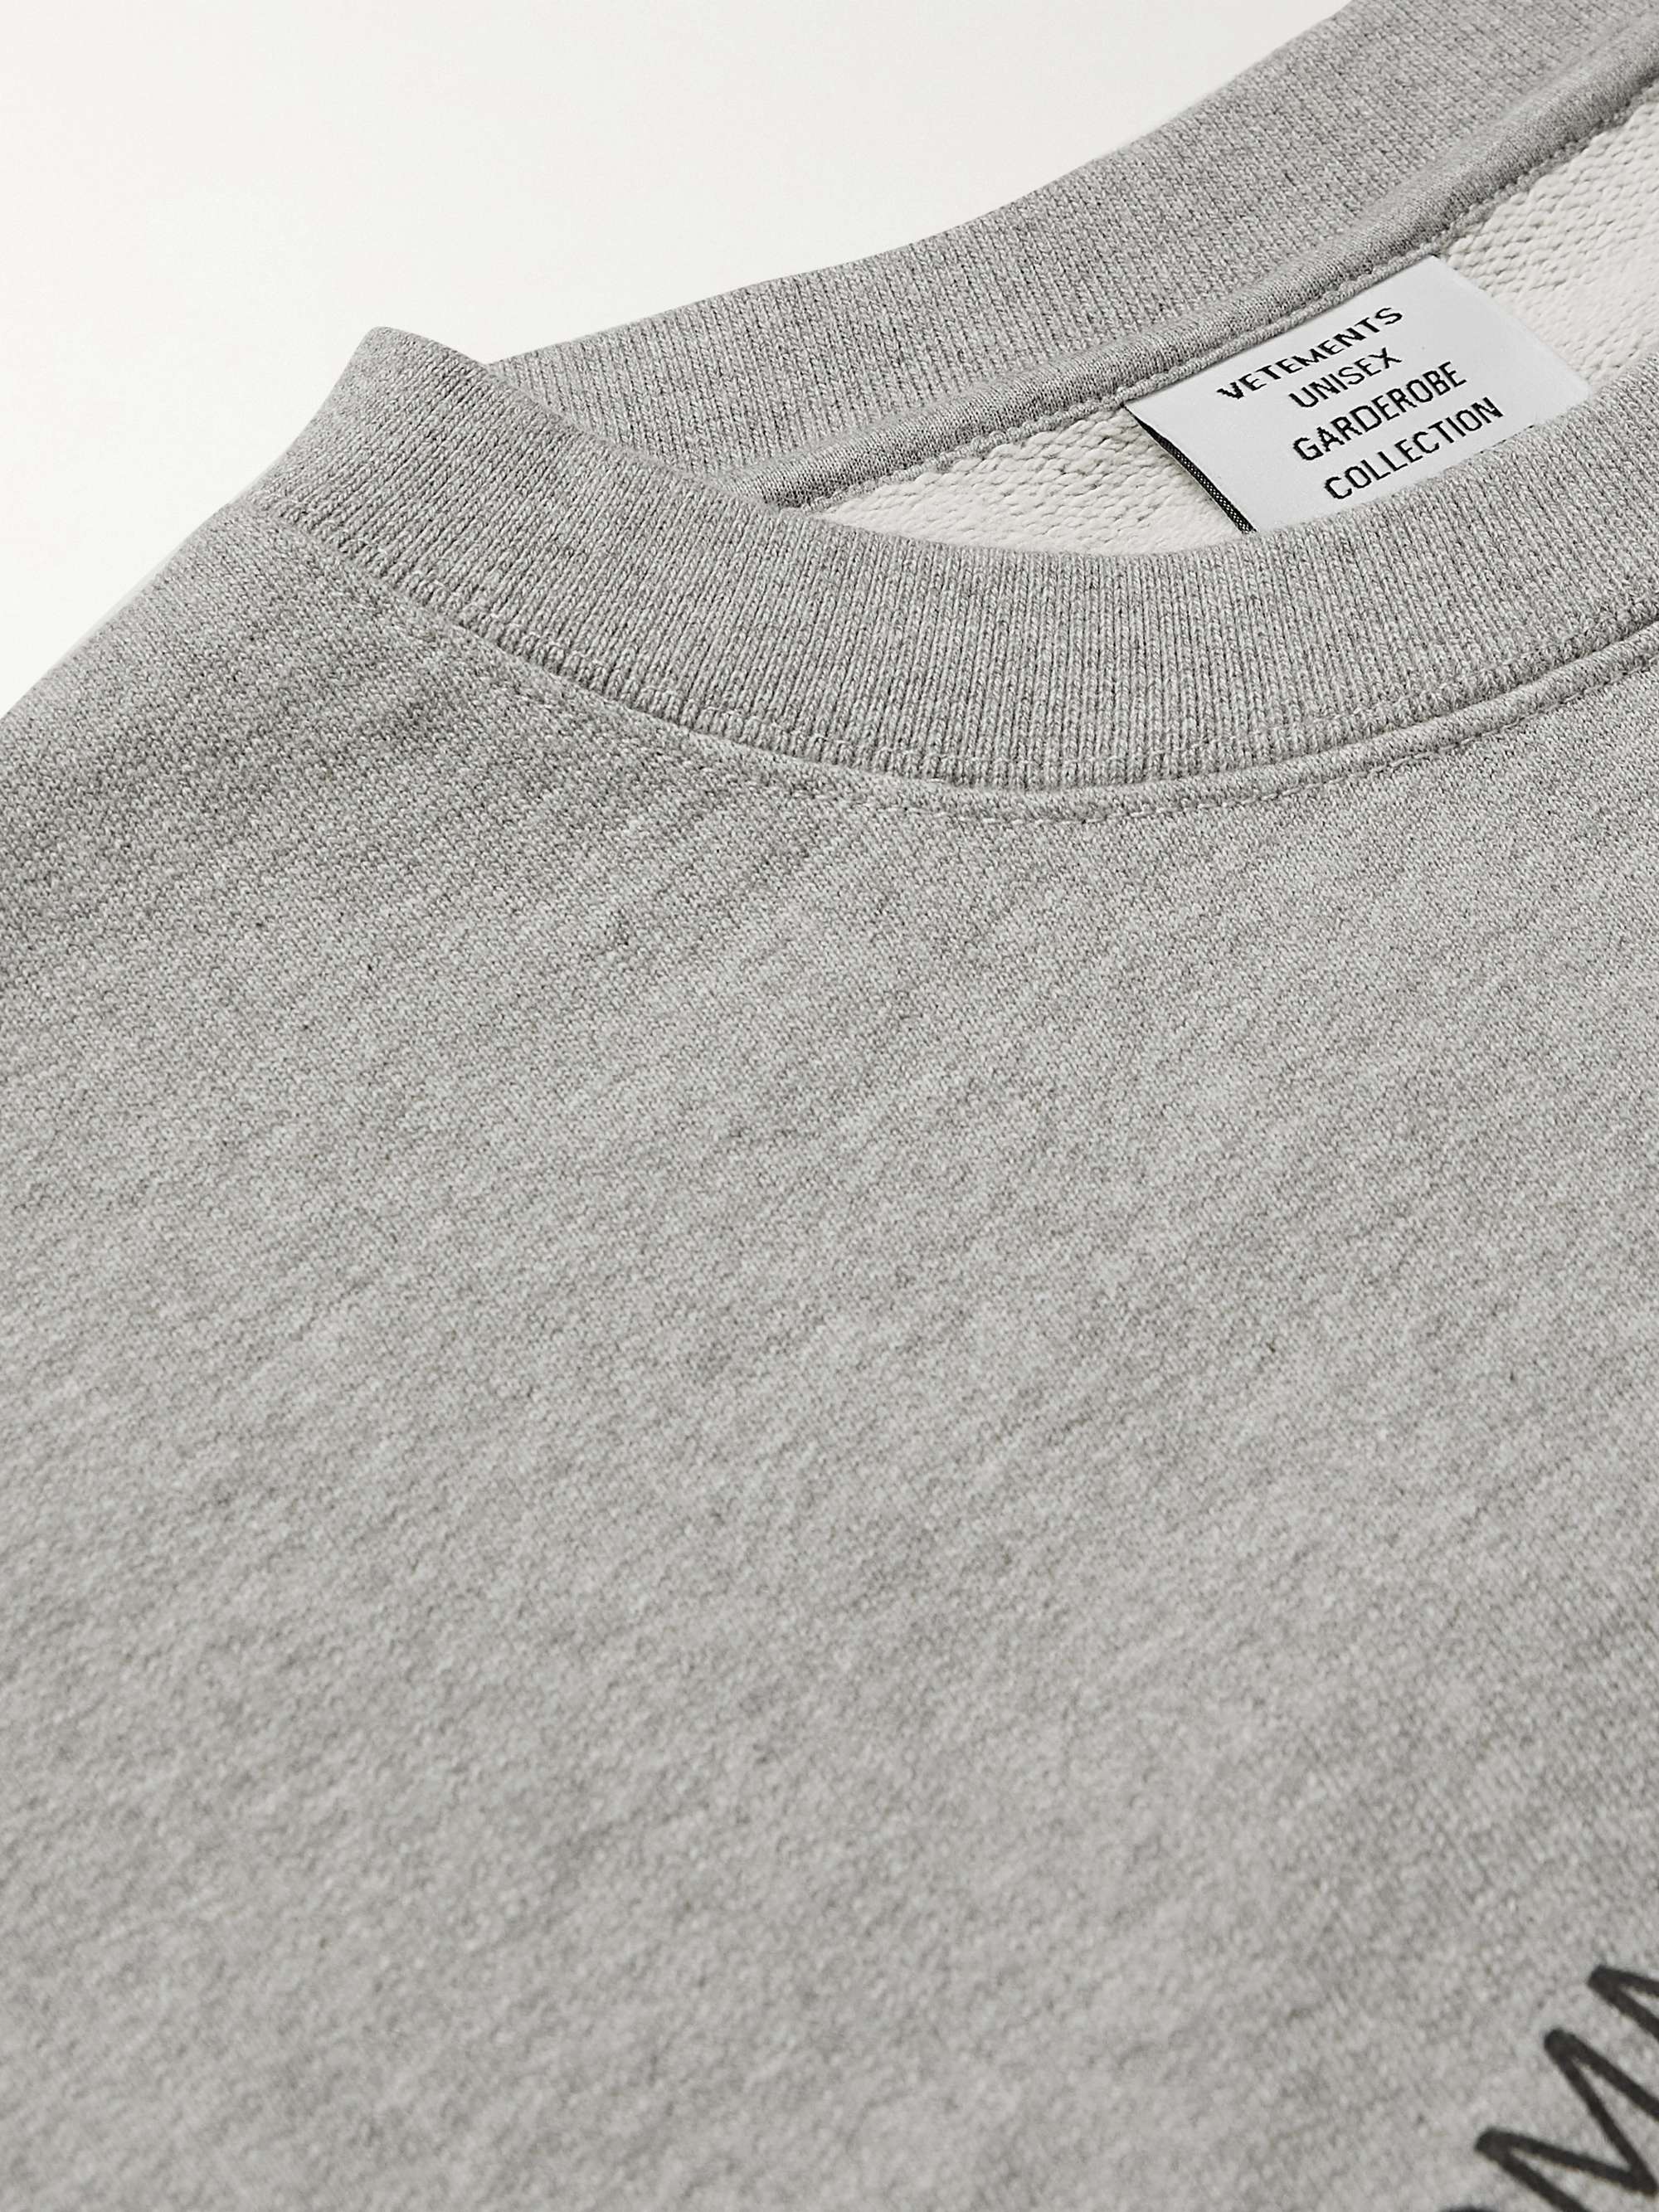 VETEMENTS Printed Cotton-Blend Jersey Sweatshirt